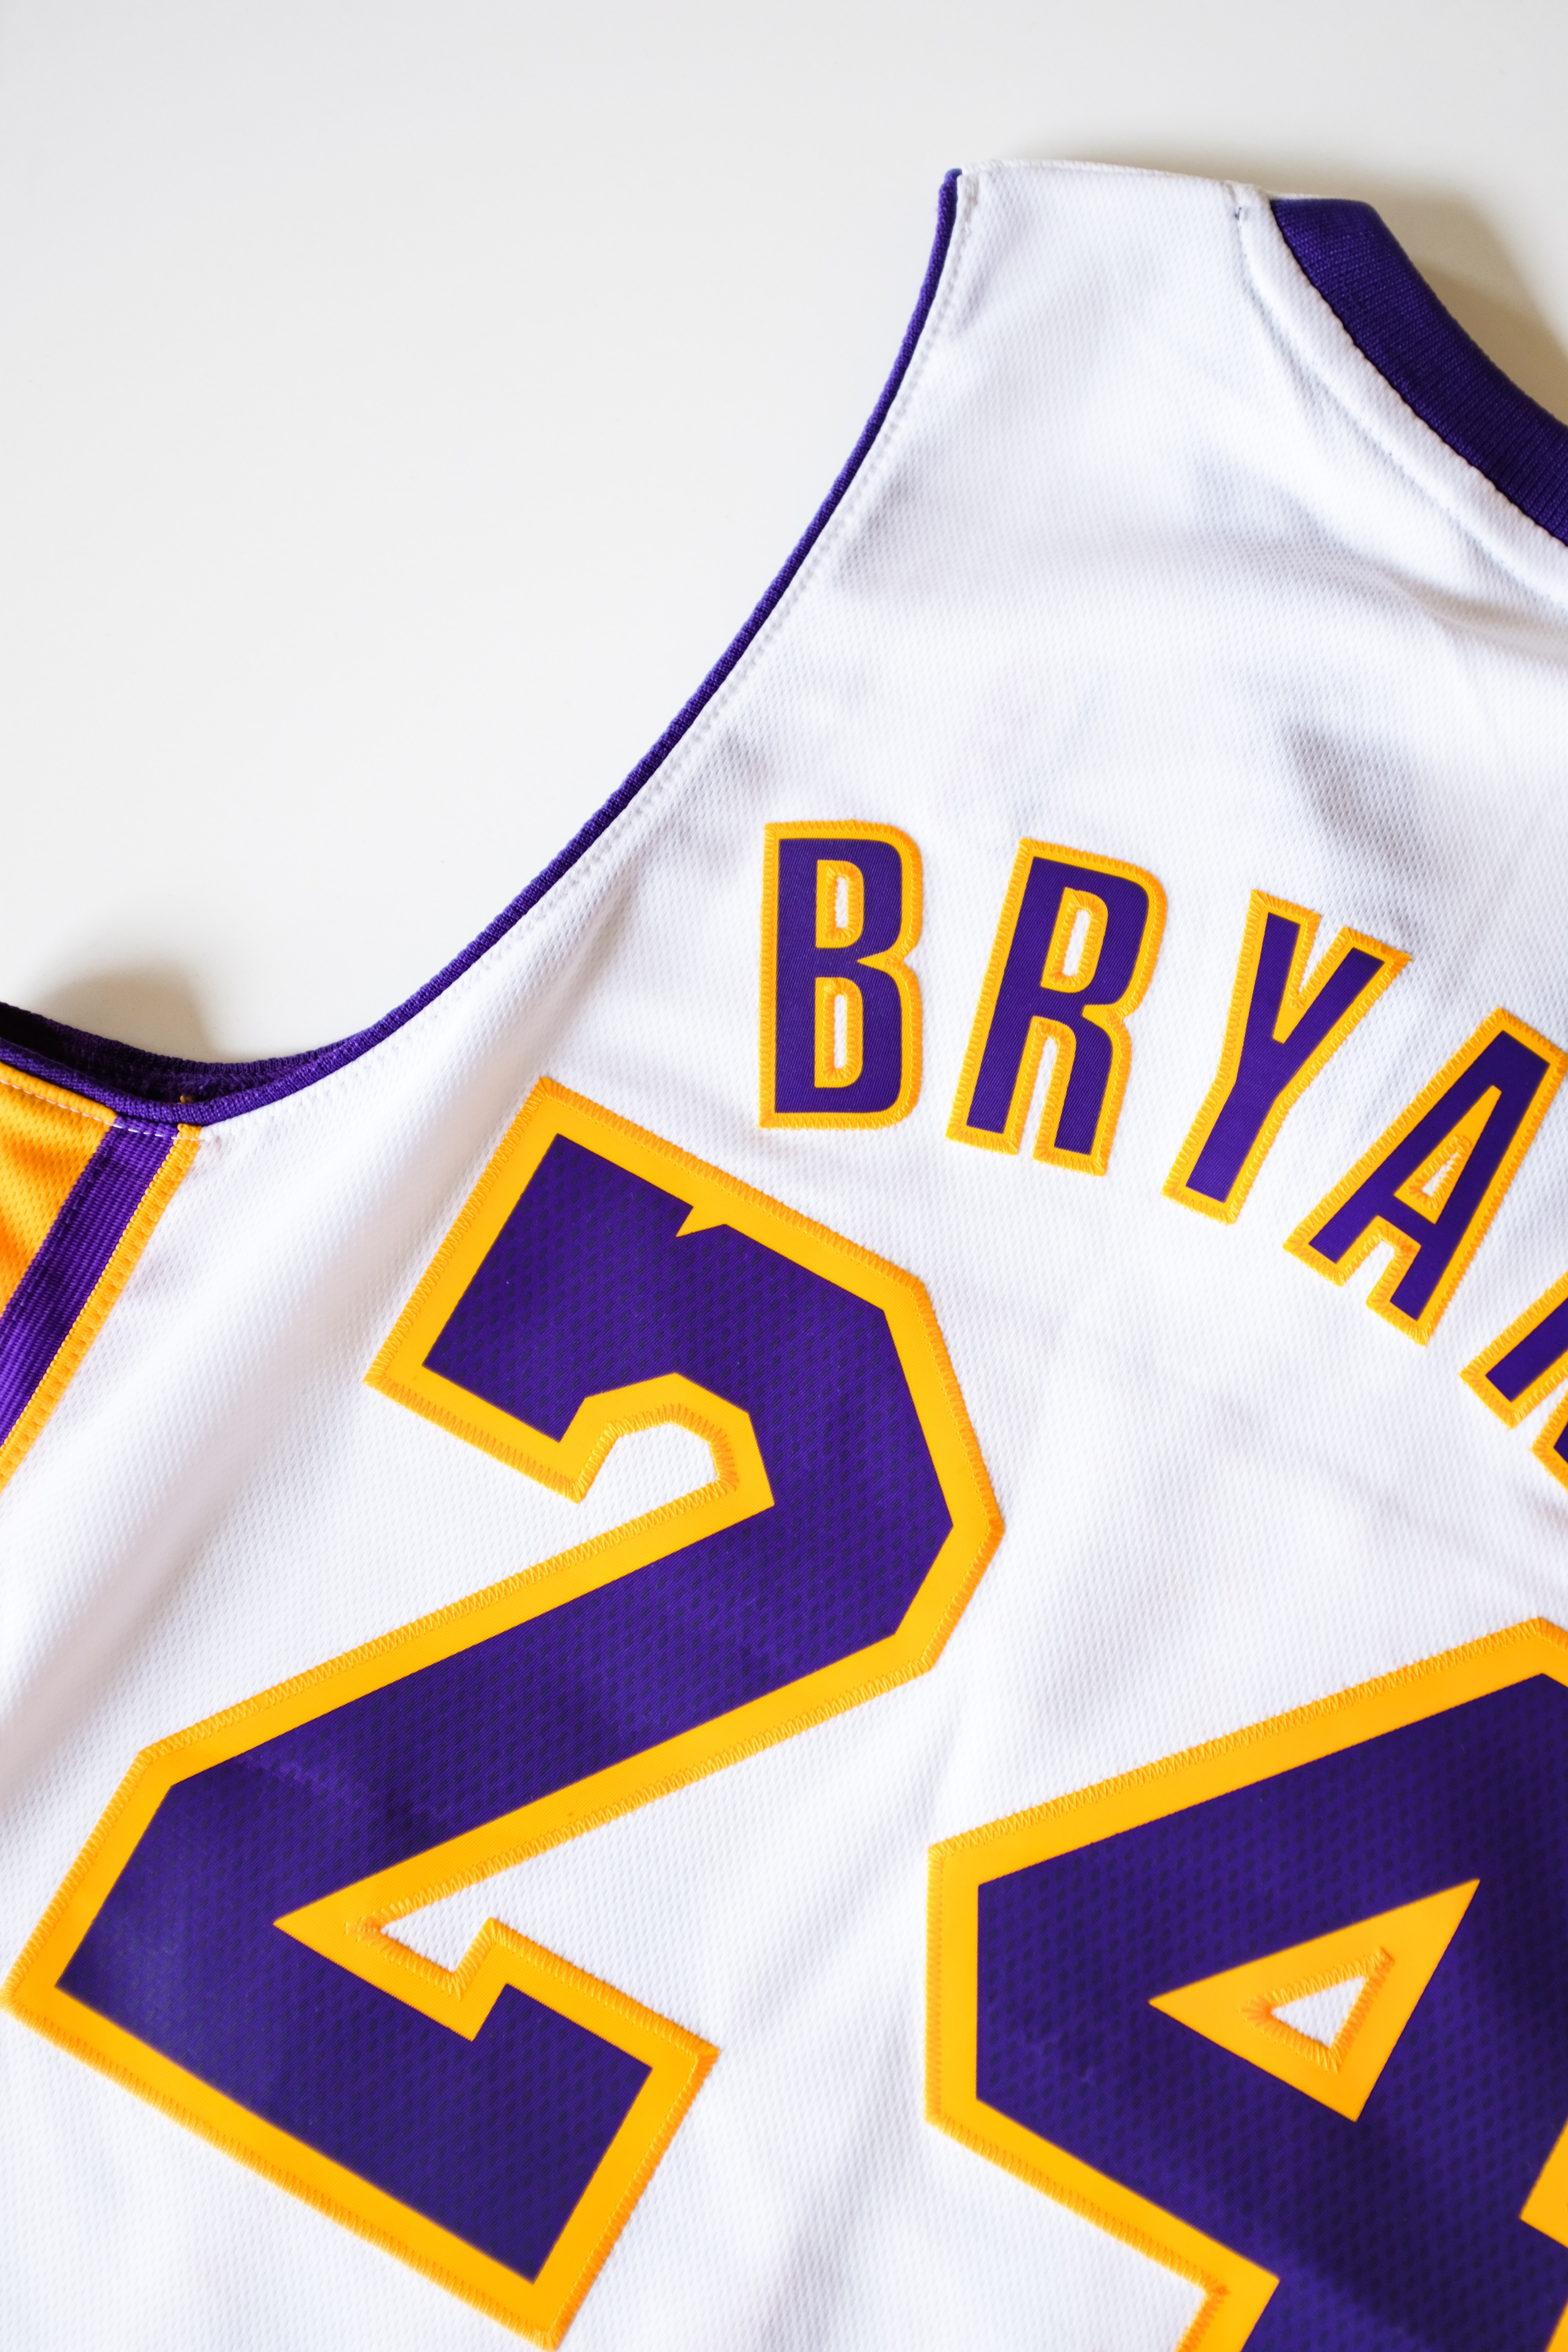 Remembering Kobe Bryant - The Phoenix